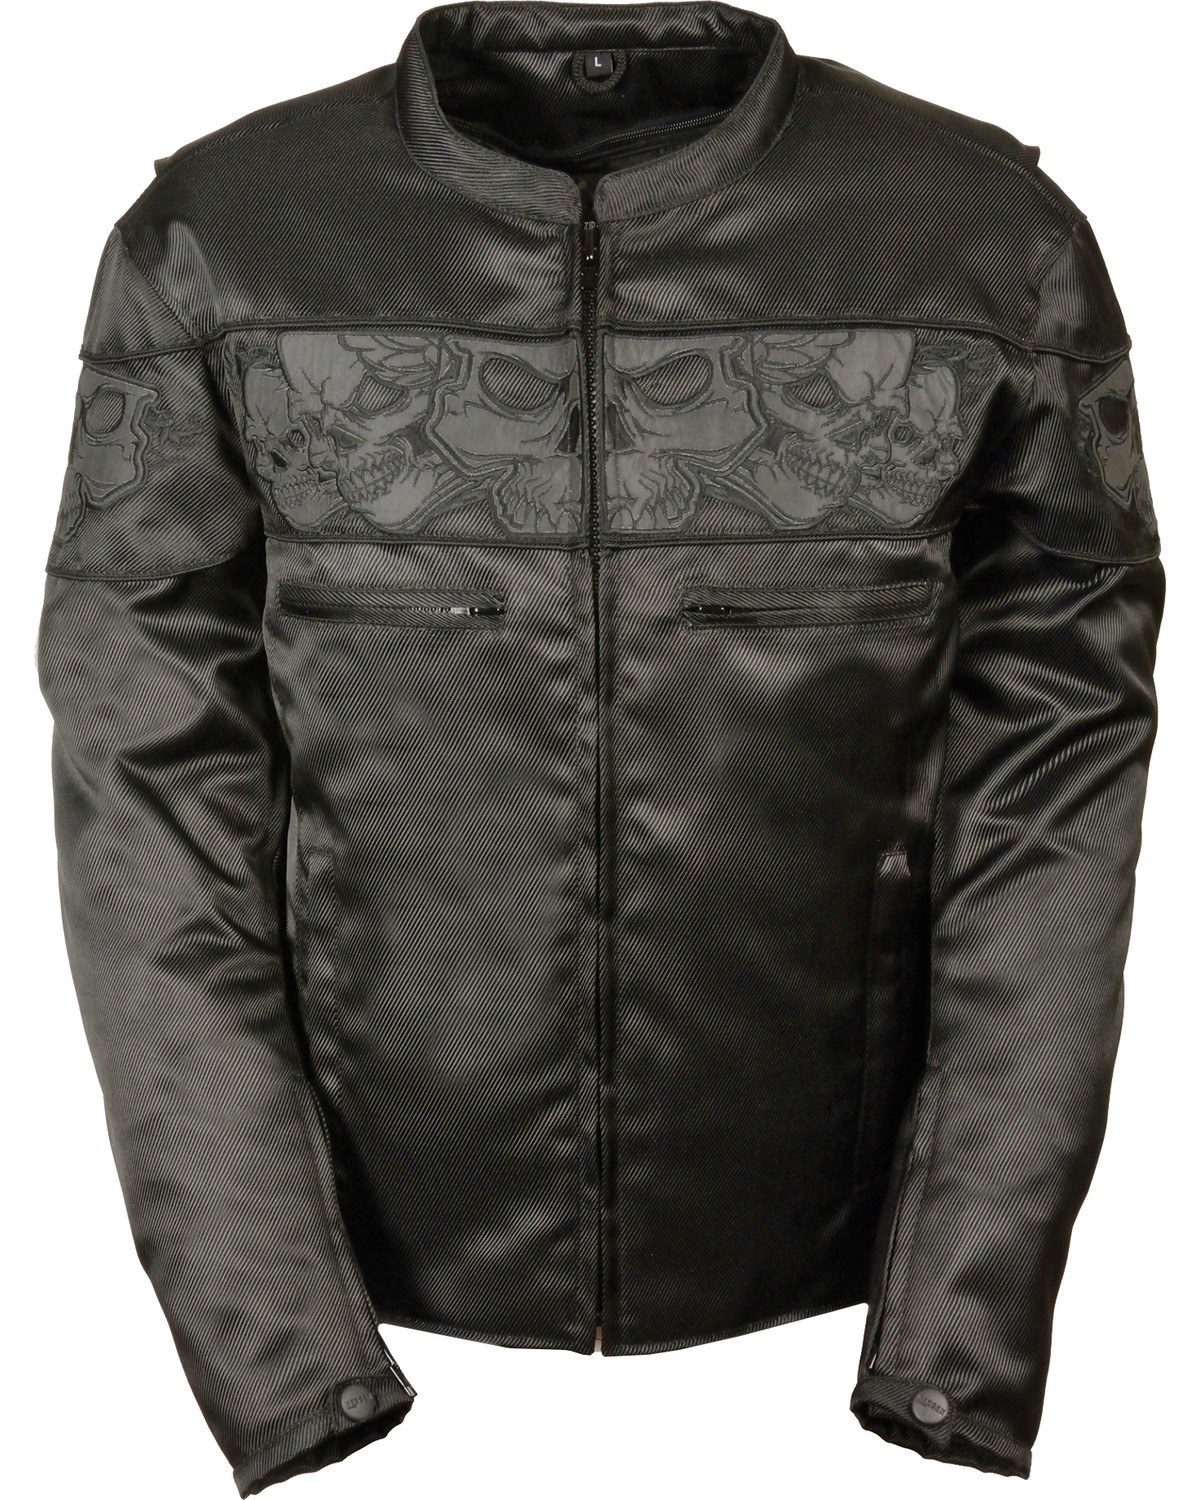 Milwaukee Leather Men's Reflective Skulls Textile Jacket - Big